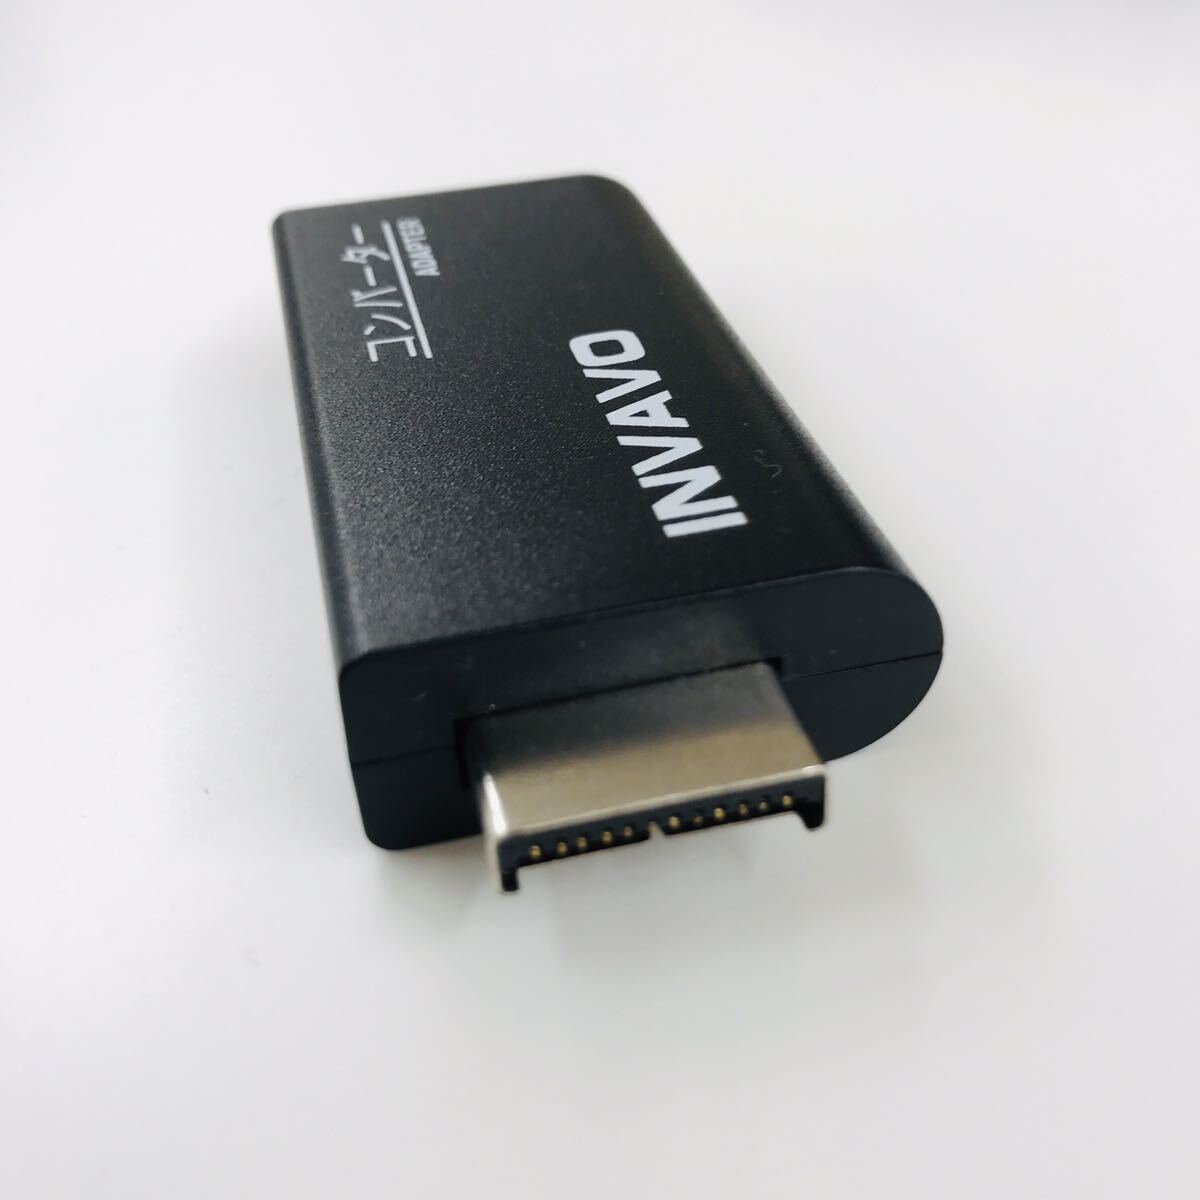  【INVAVO】 PS2 コンバーター HDMI接続コネクター HDMI COVERTER (USBケーブル＋HDMIケーブル＋日本語取扱説明書付き)_画像6